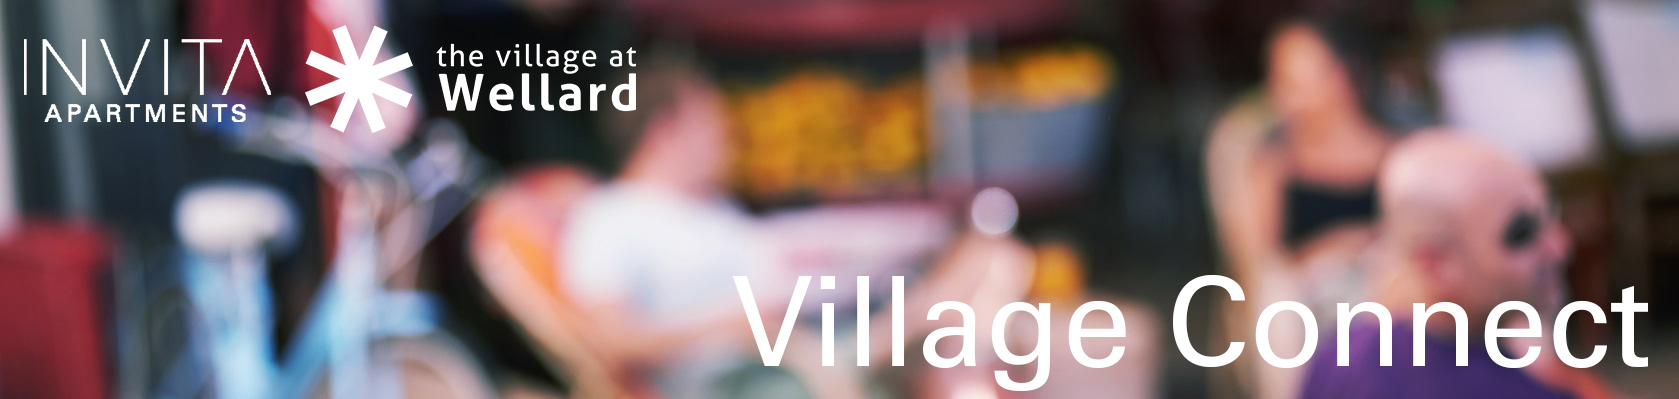 village connect header invita